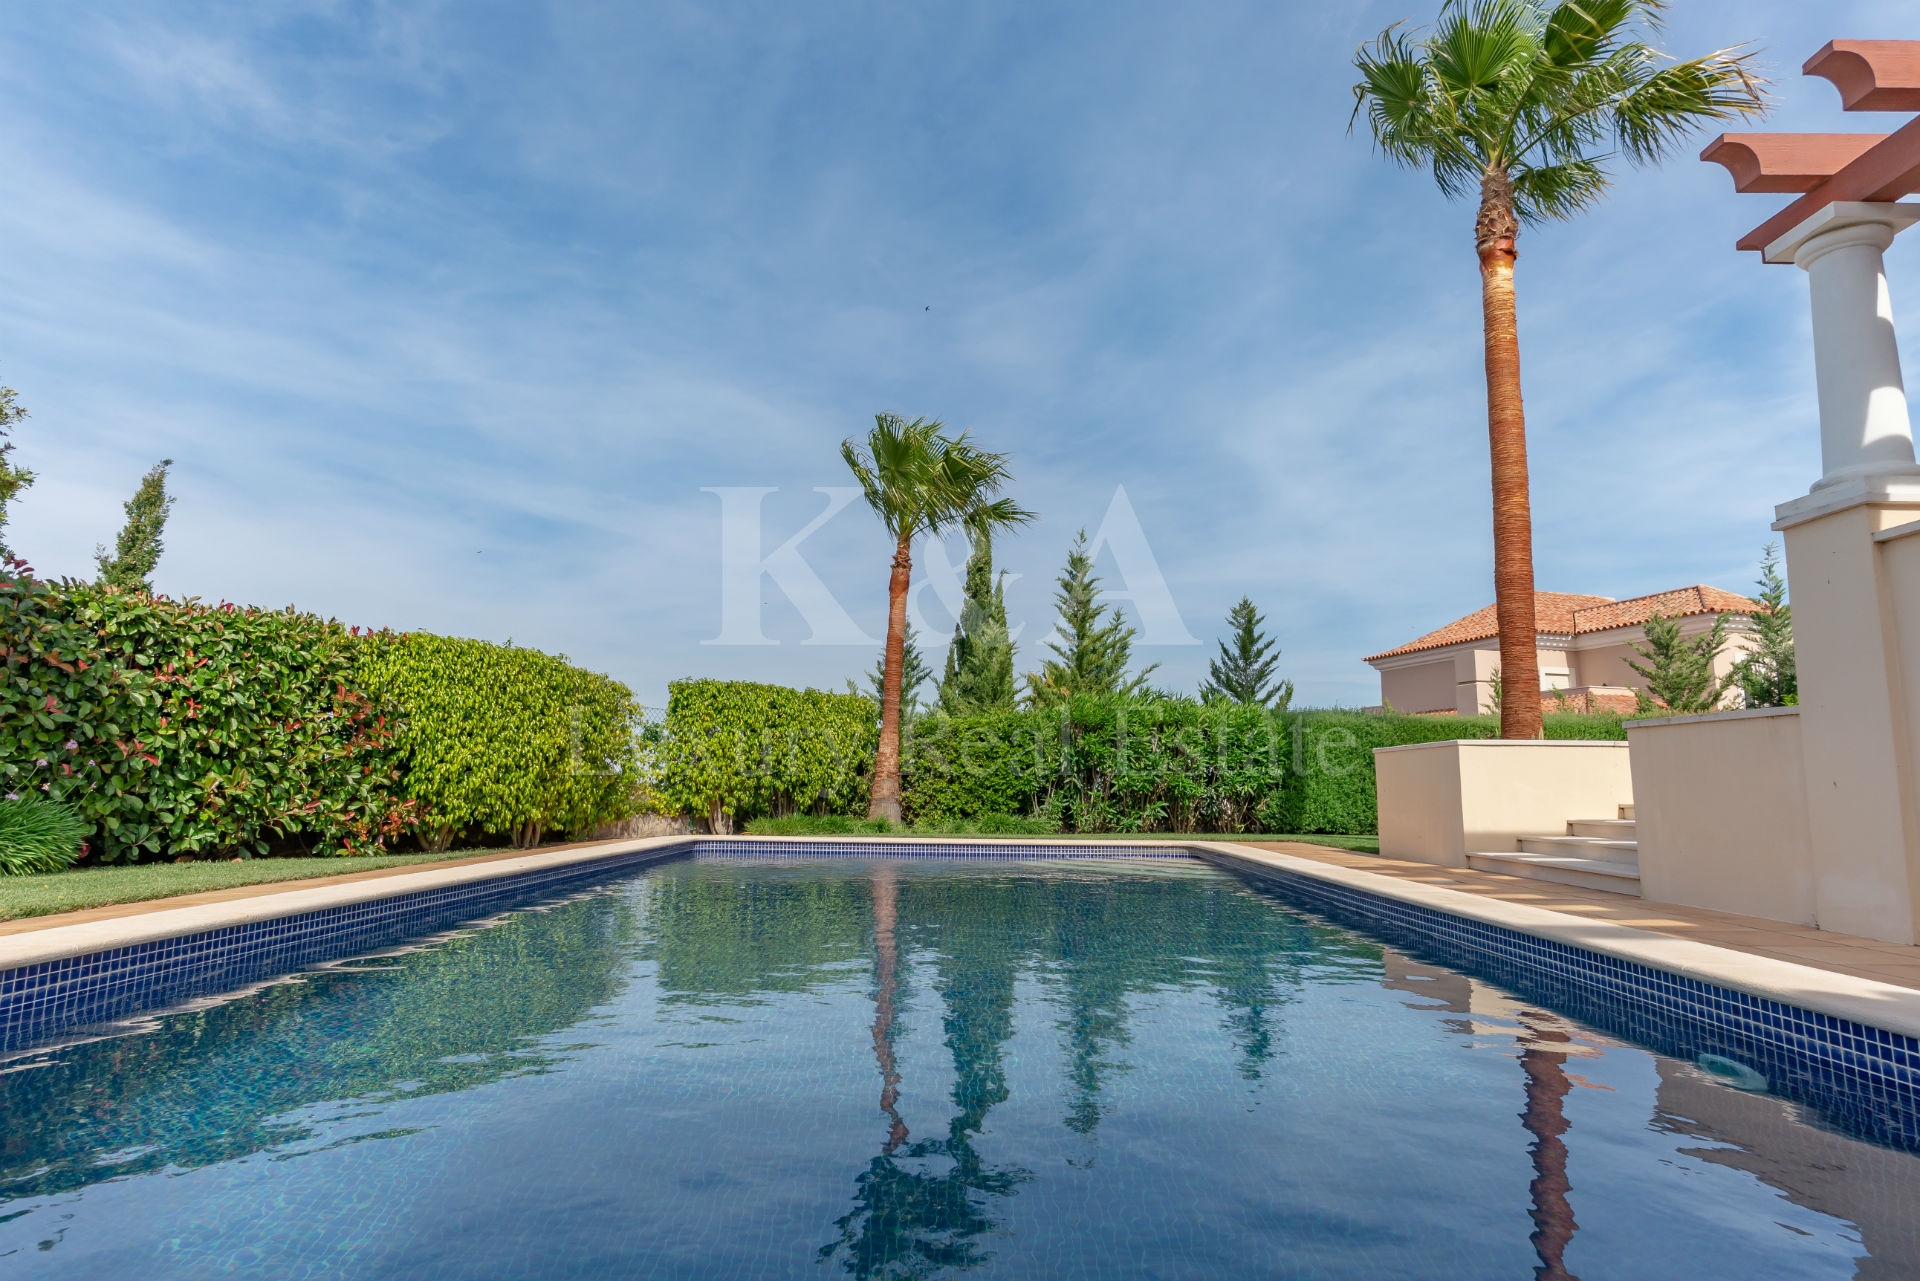 4 Bedroom villa in an exclusive golf resort, Algarve